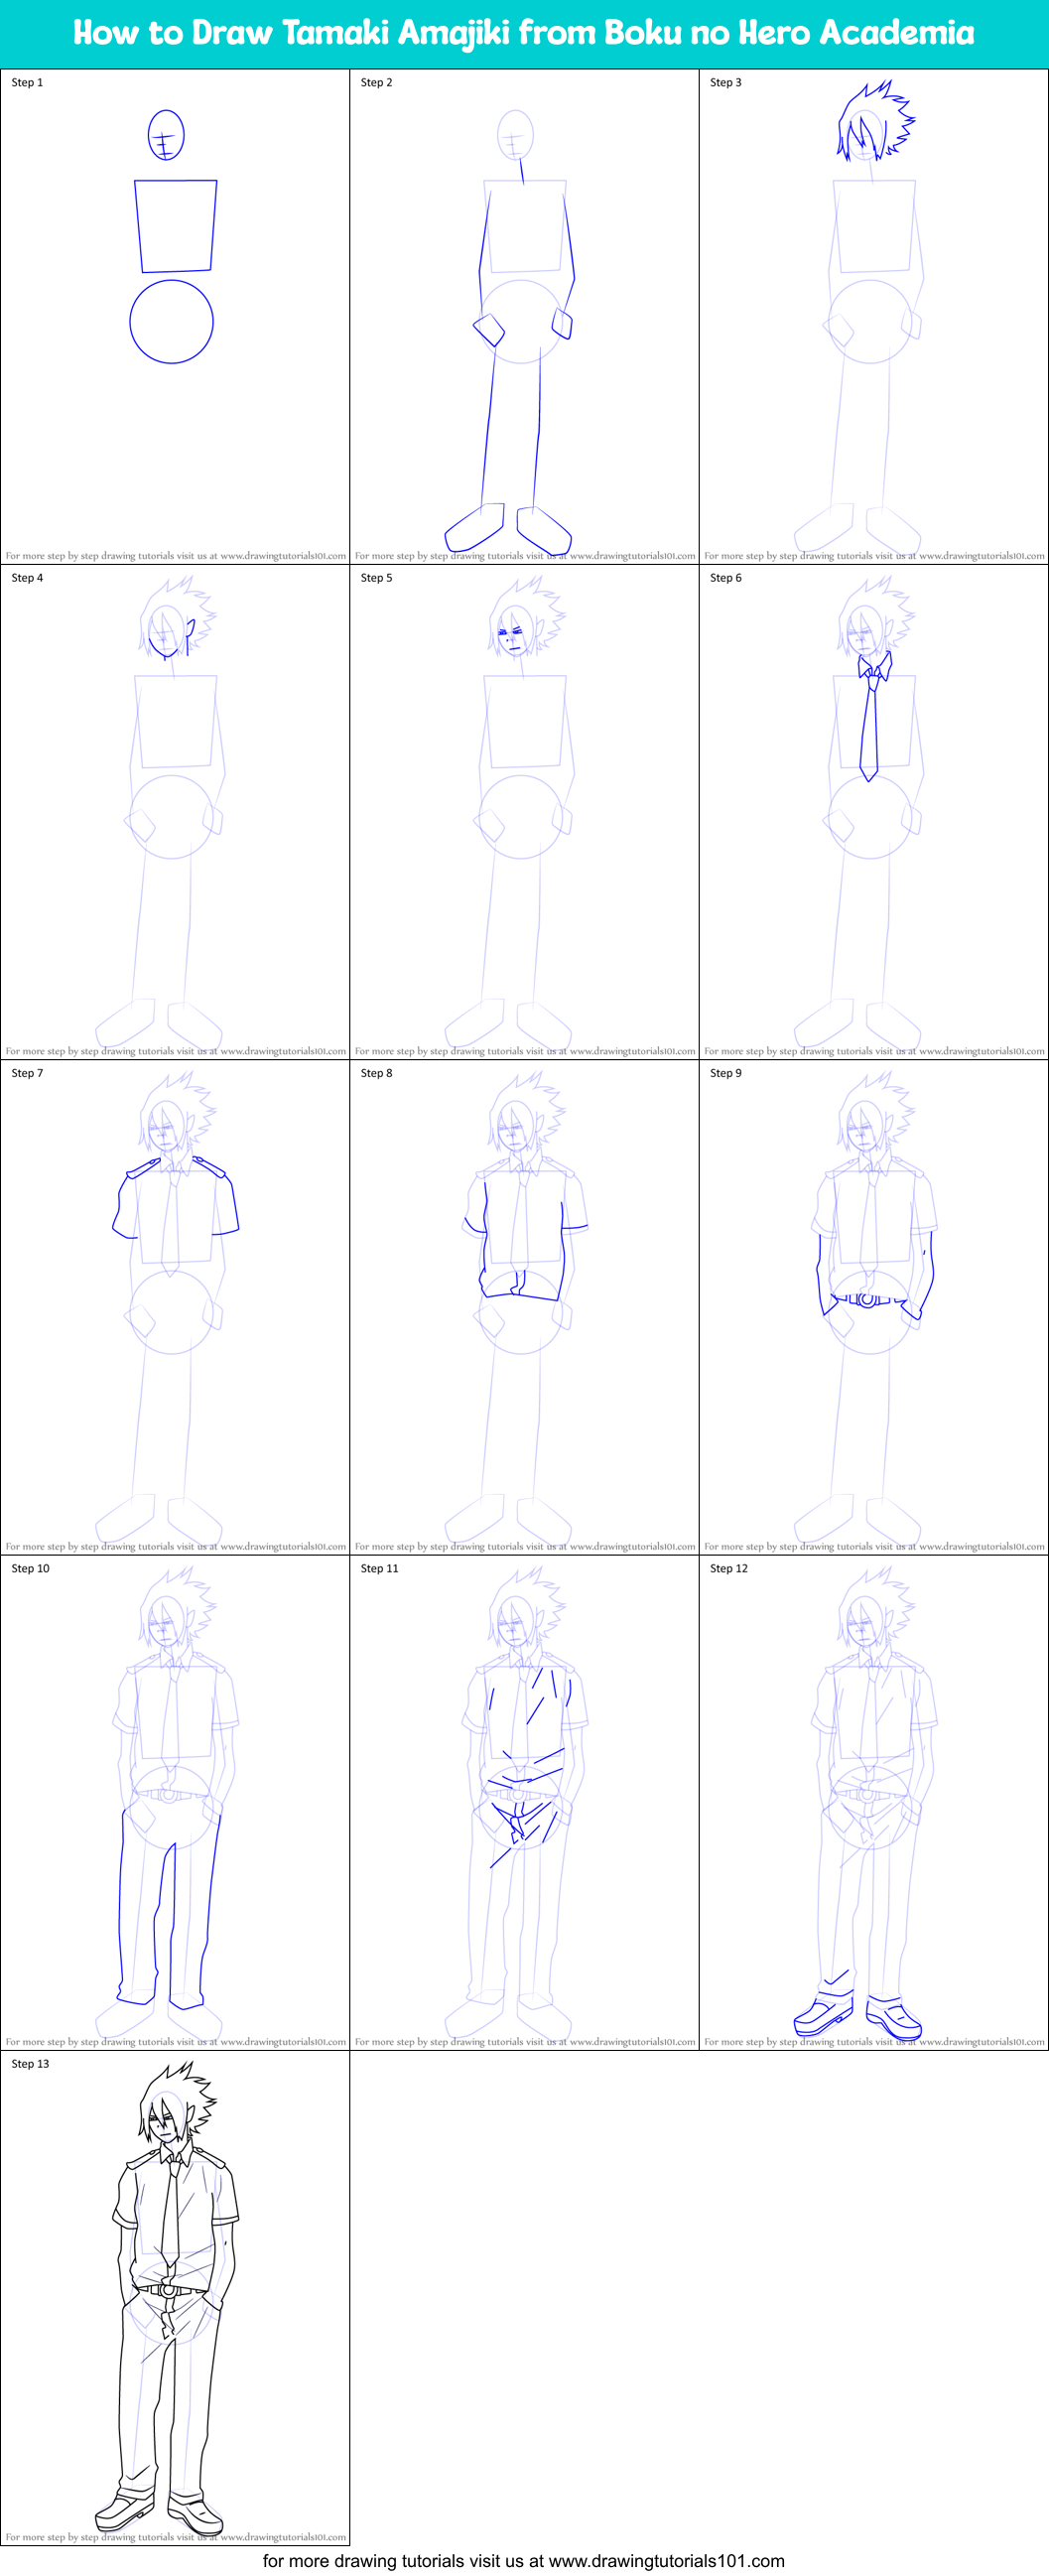 How to Draw Tamaki Amajiki from Boku no Hero Academia printable step by